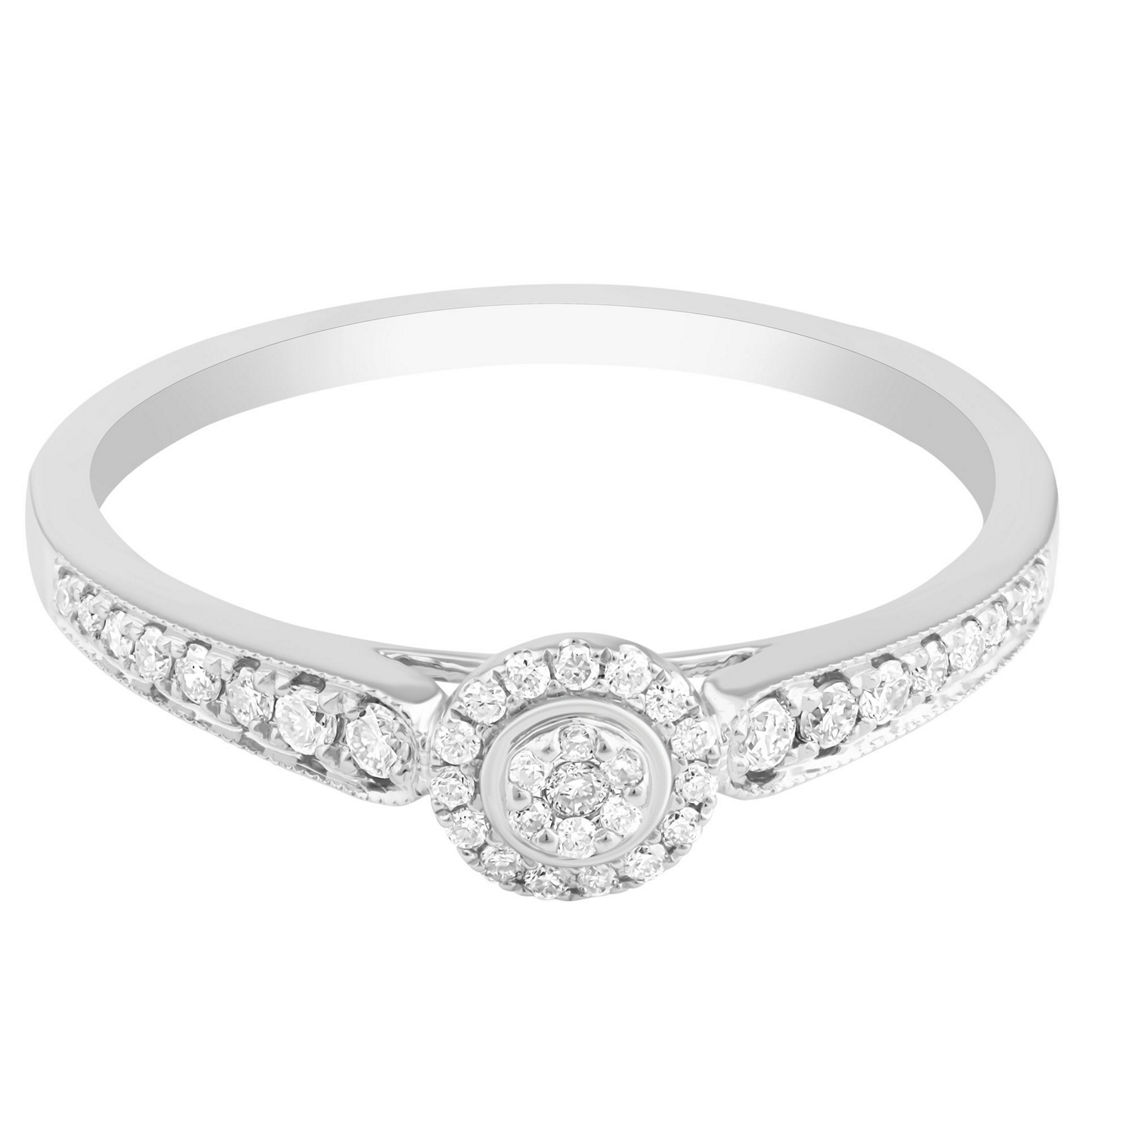 APMG 14K White Gold 1/6 CTW Diamond Halo Ring - Image 2 of 4